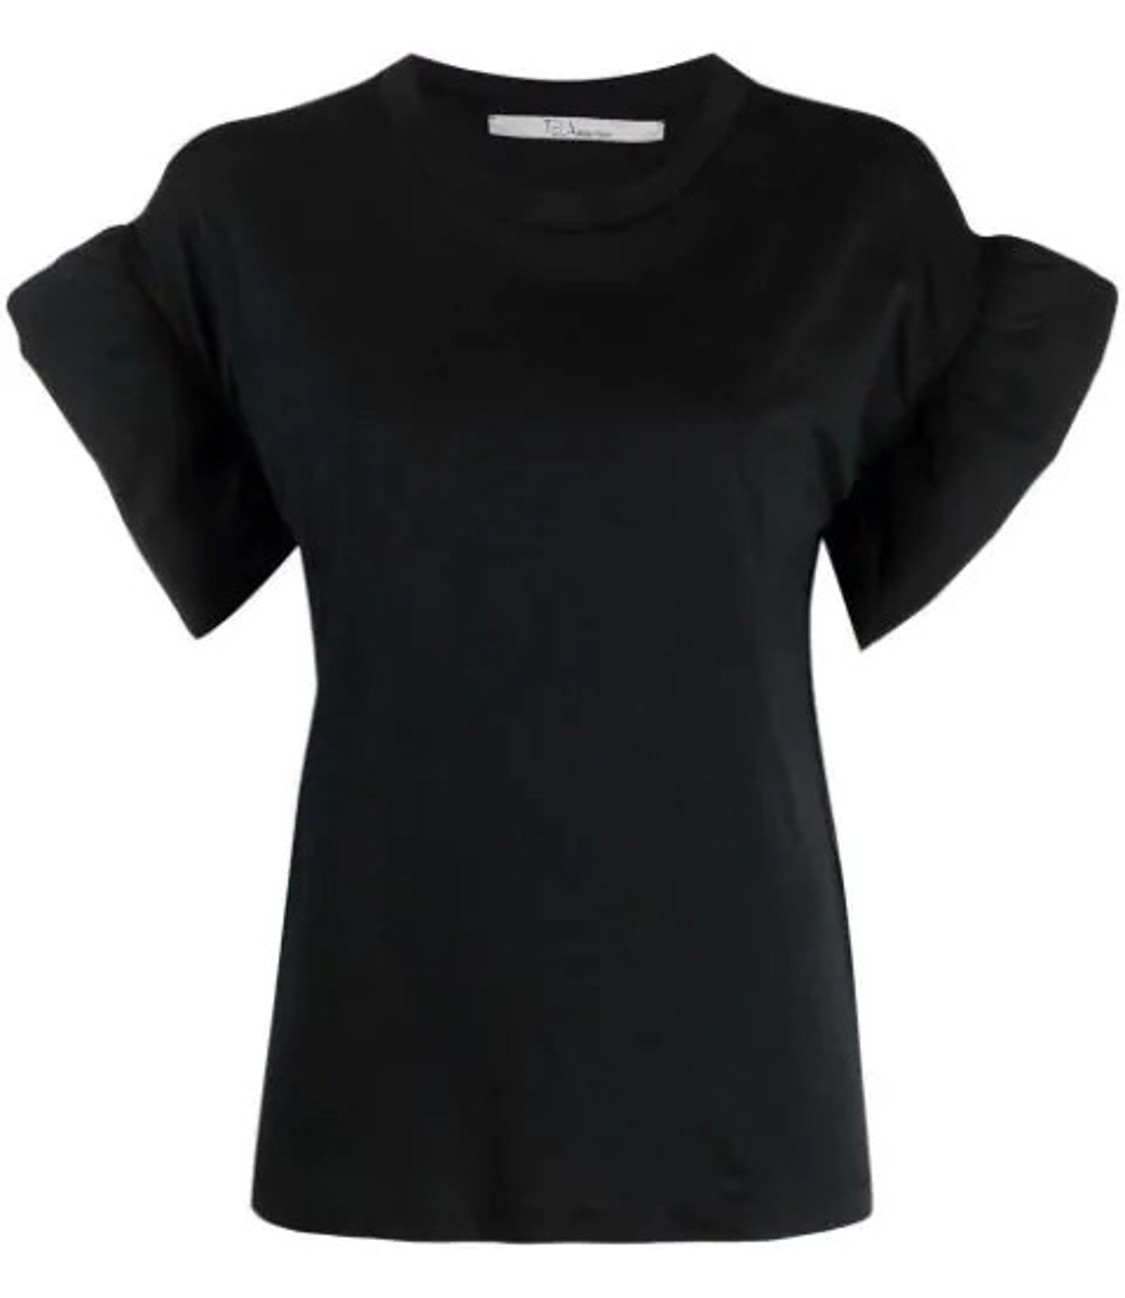 shop Tela Sales T-shirts: T-shirts Tela, manica corta, girocollo, fit regolare, manica bold.

Composizione: 100% cotone. number 2175